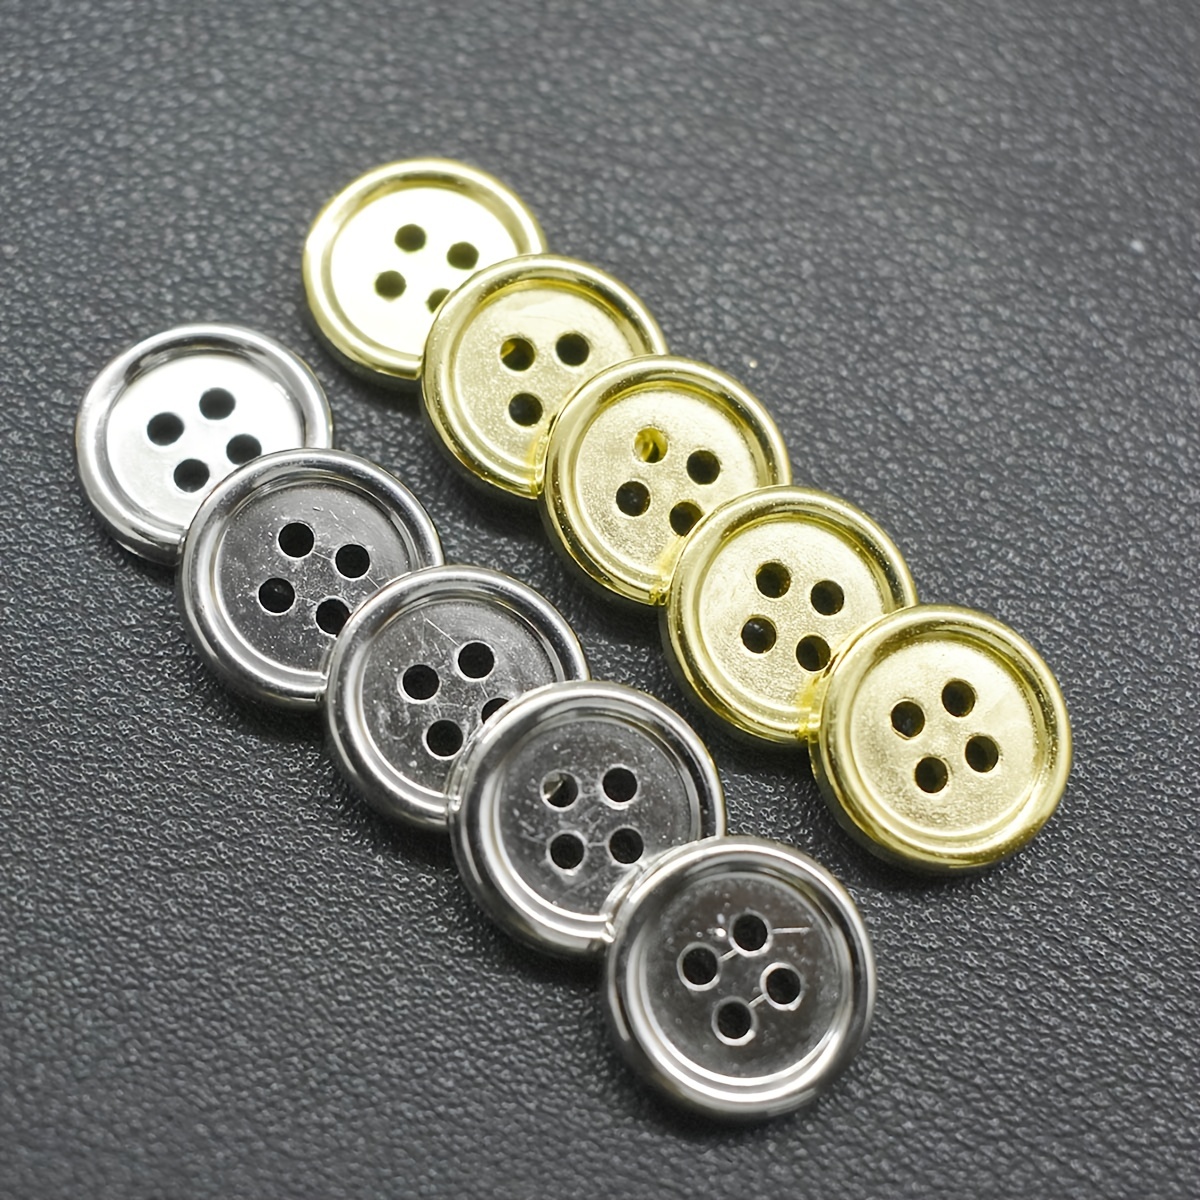  10Pcs Metal Flat Buttons Sewing Flat Metal Button Shirt Coat  Suit Buckle Buttons 25mm Matte Black